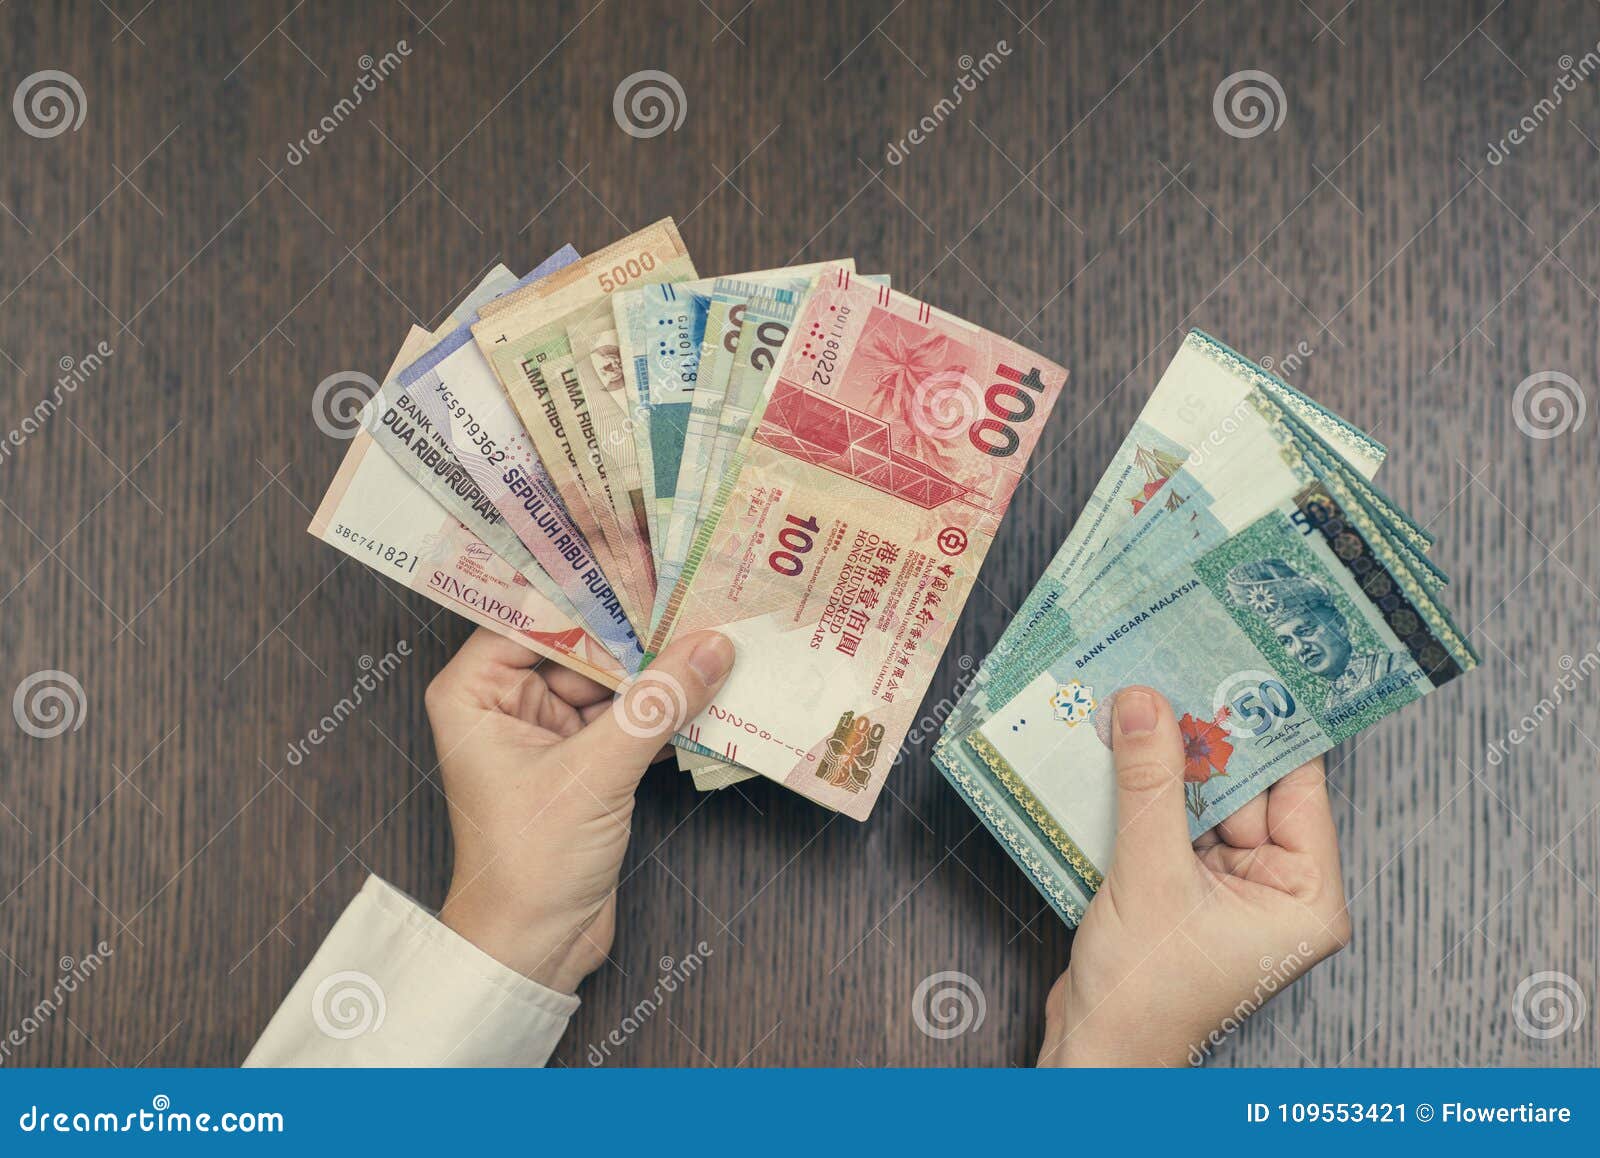 100 singapore dollar to myr